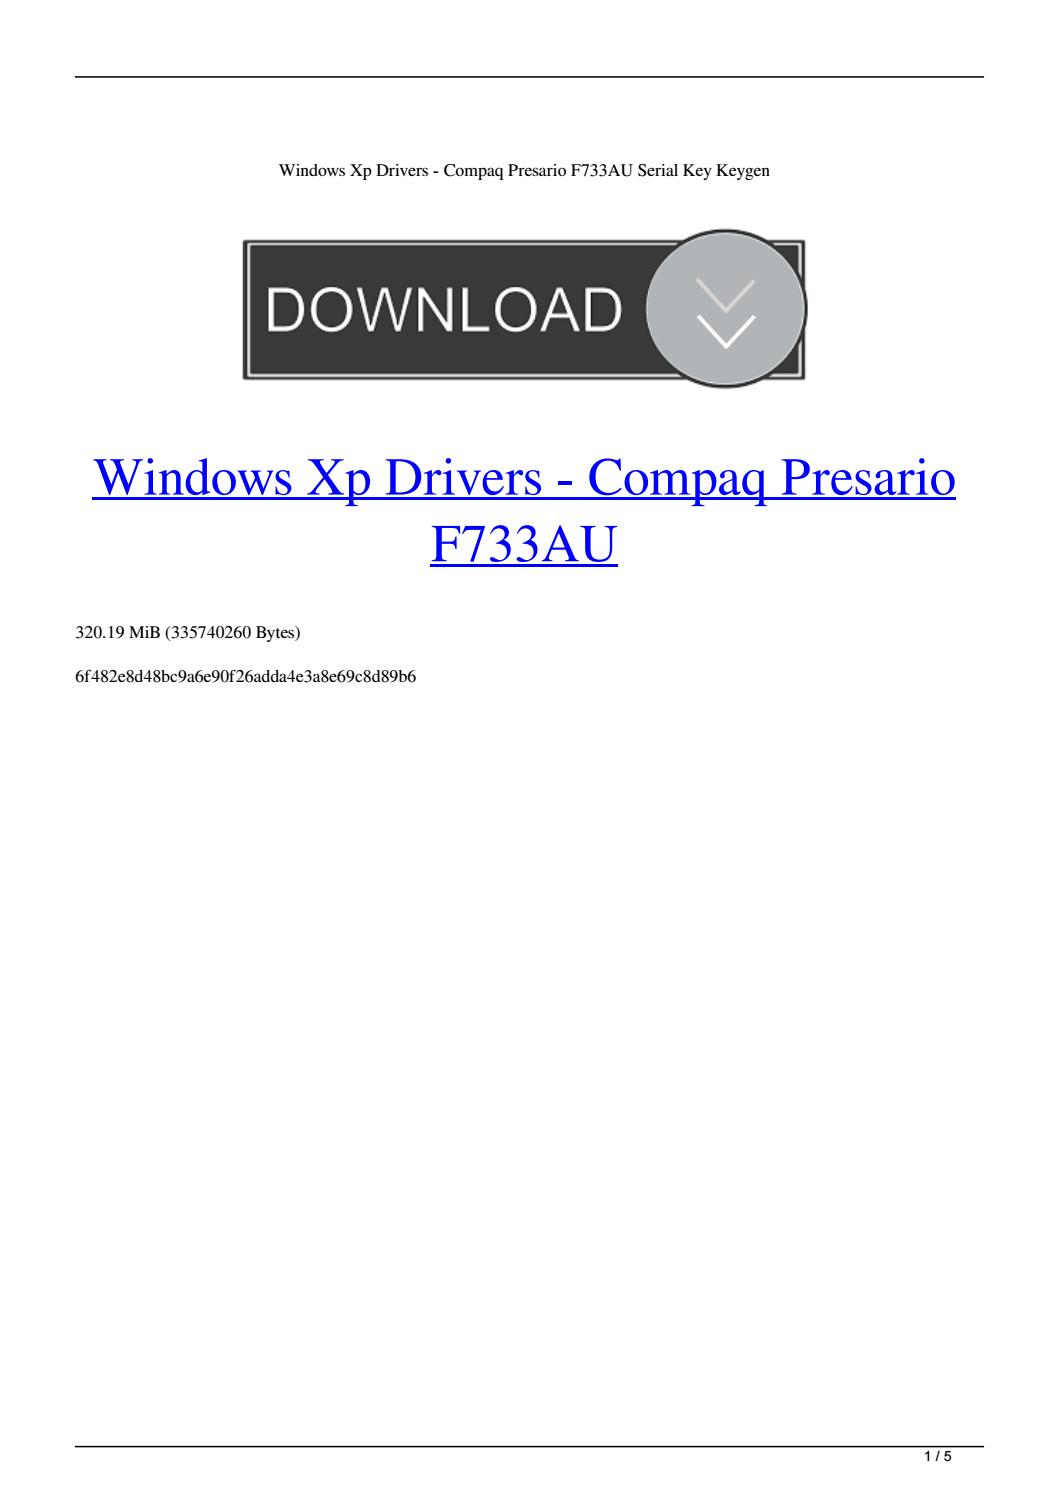 Presario f700 drivers windows 7